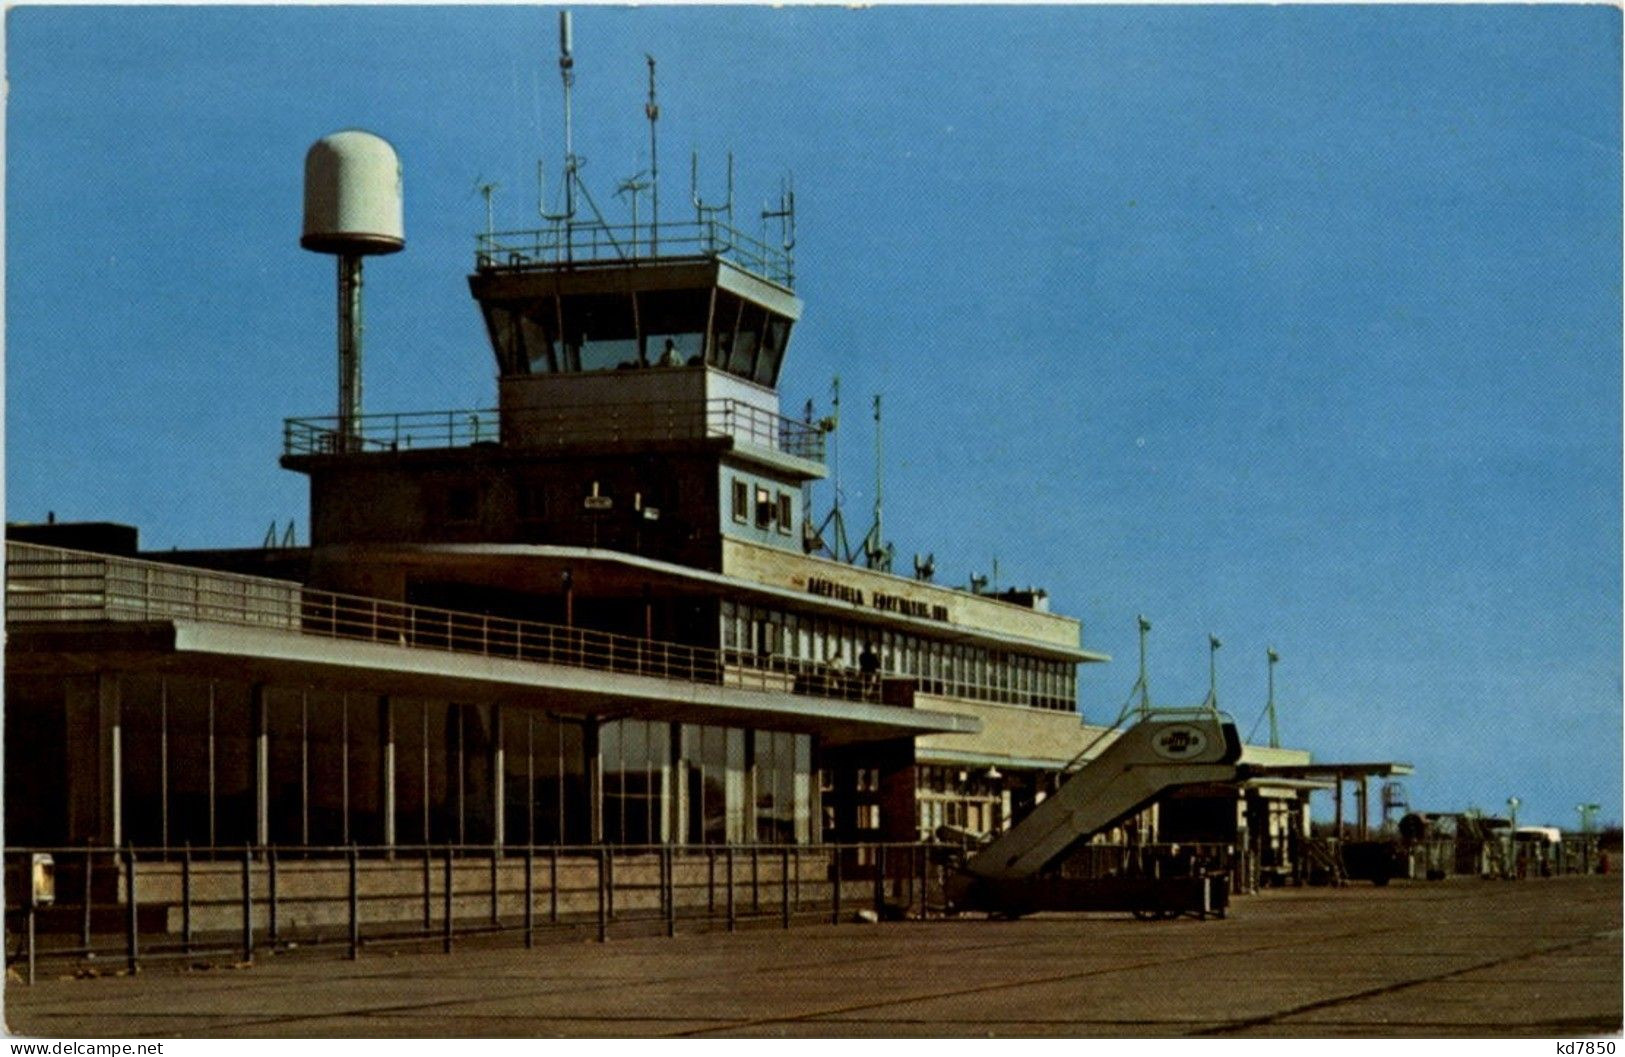 Bear Field Fort Wayne - Airport - Fort Wayne